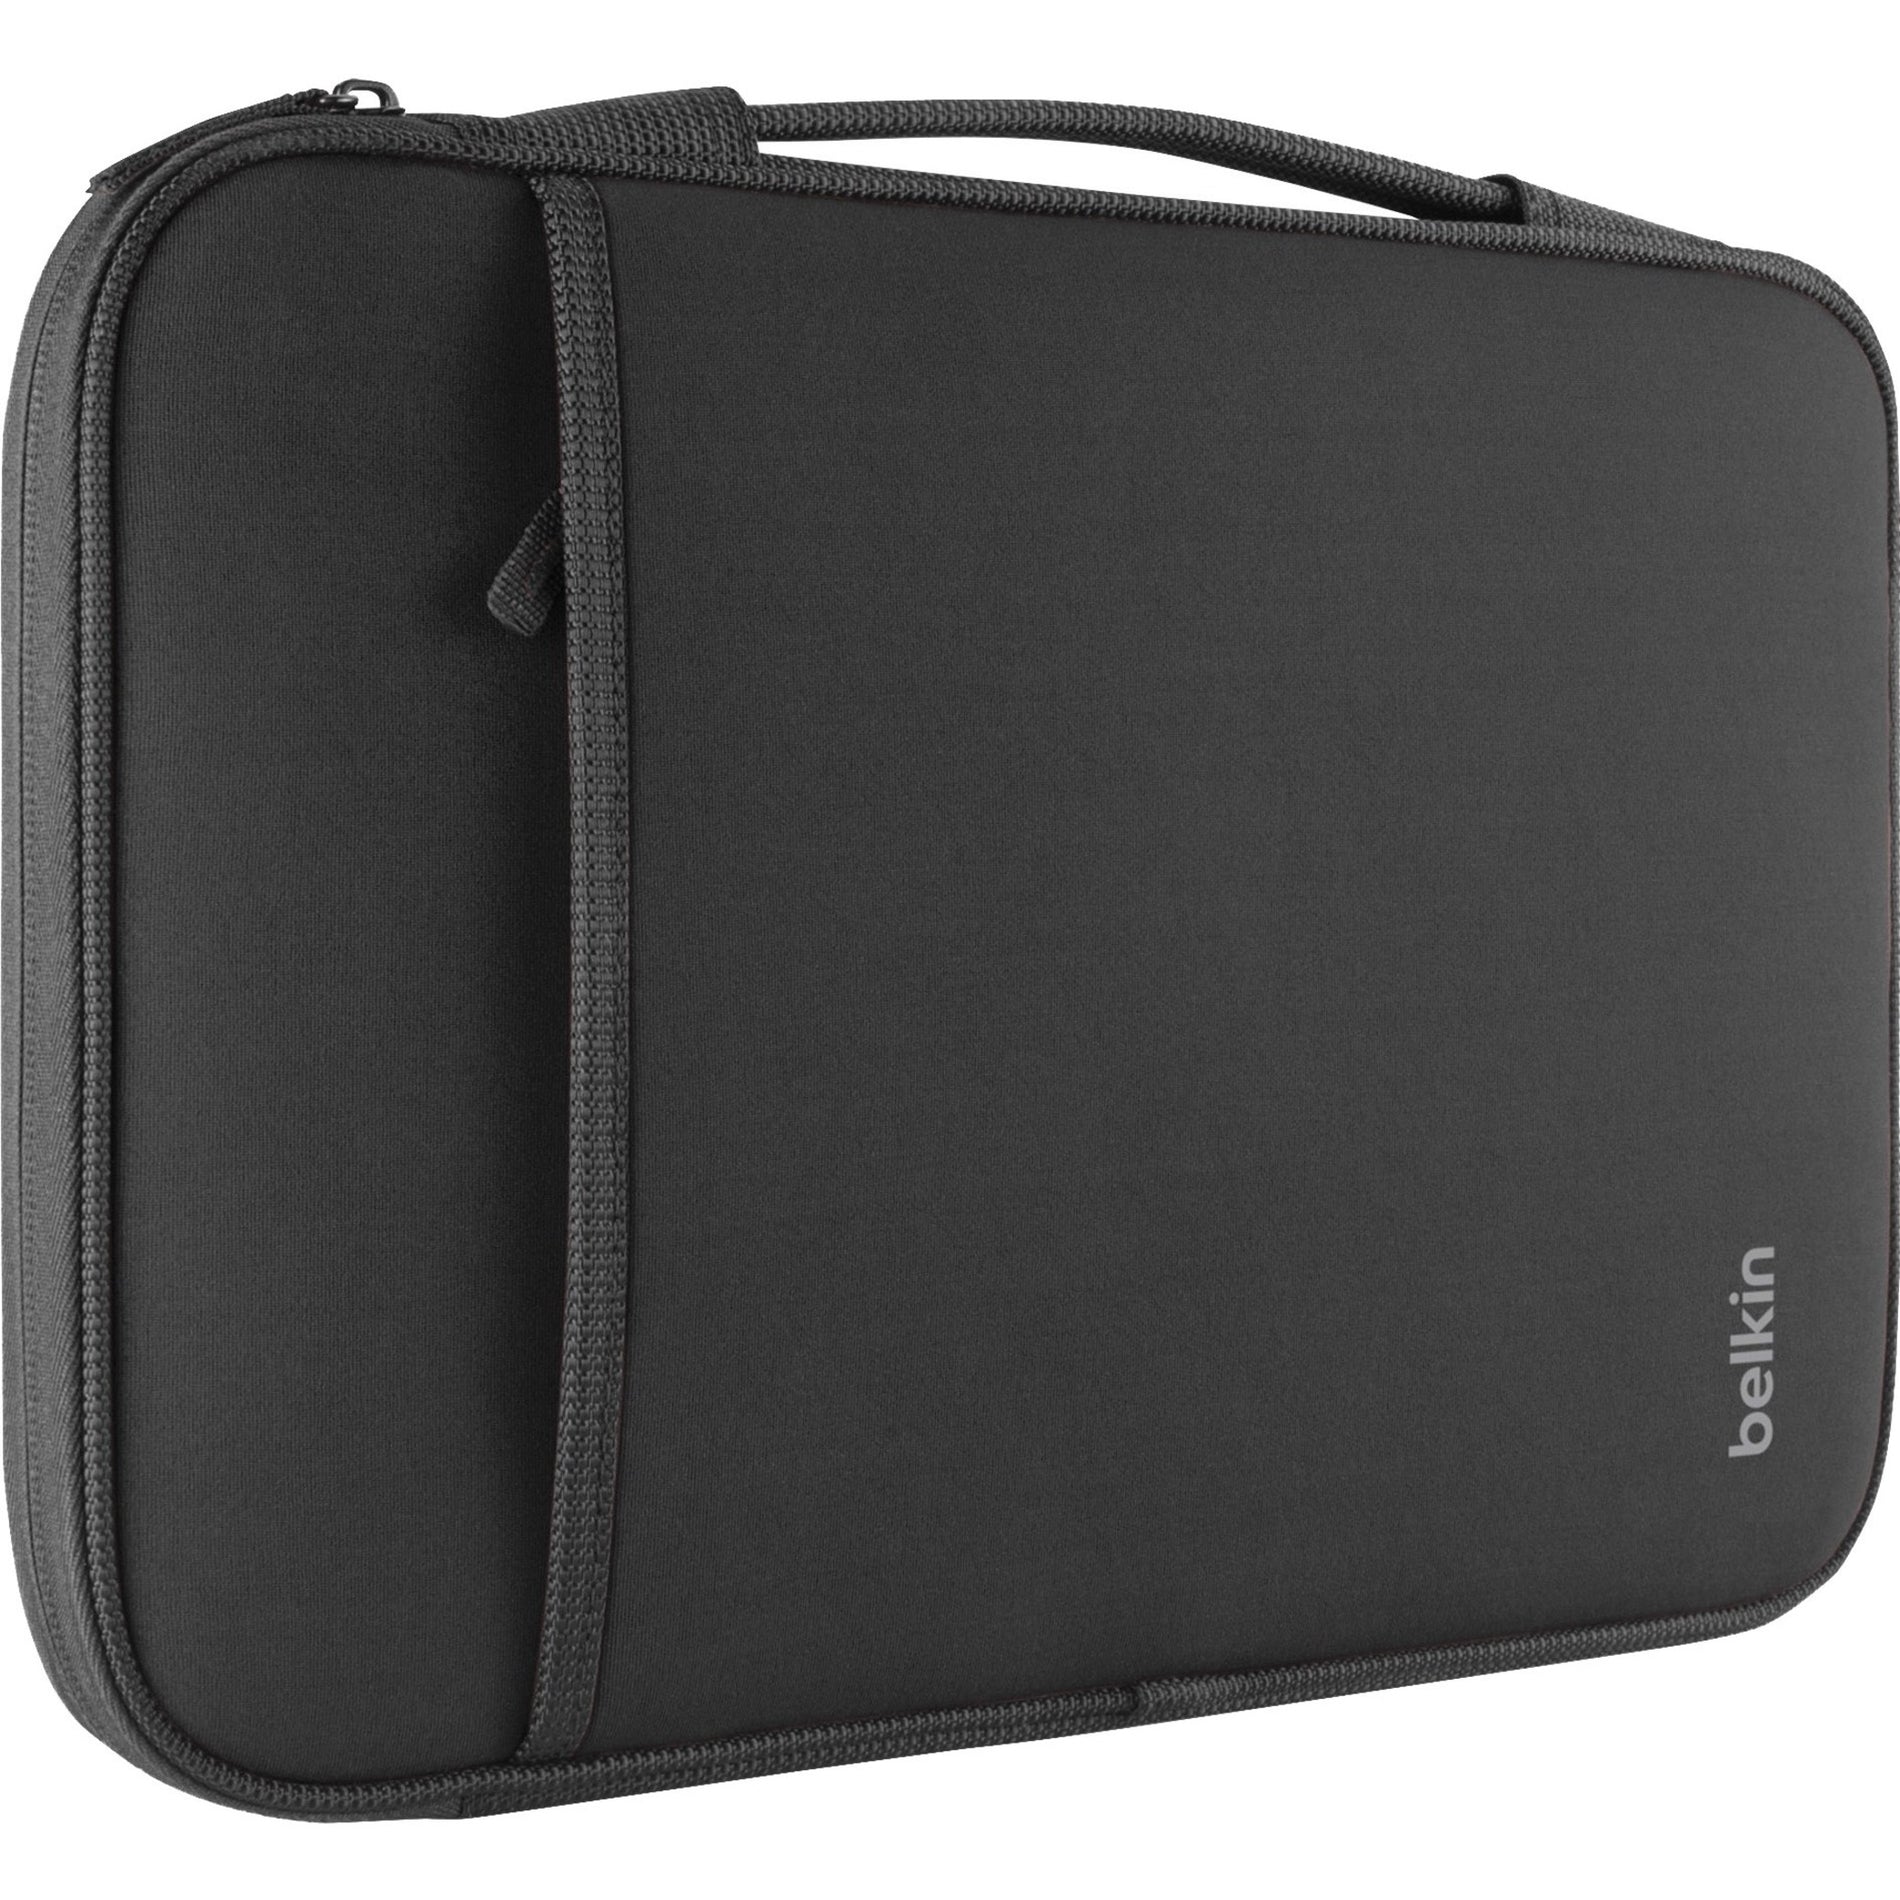 Belkin B2B081-C00 11" Chromebook Sleeve Black, Side-loading Zipper, Retractable Handle